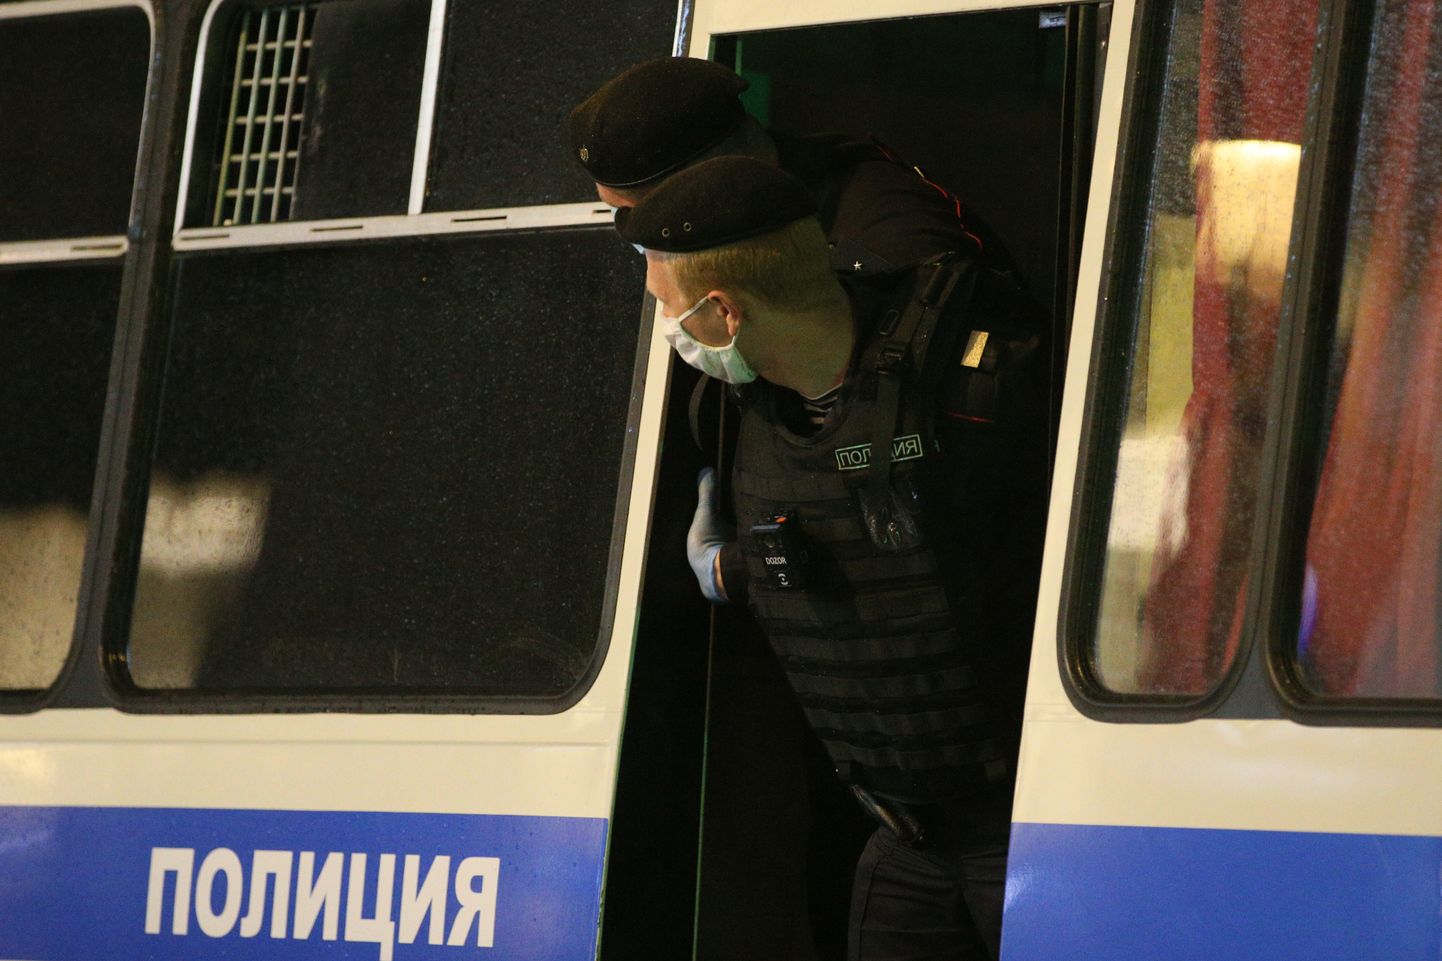 Moskva politsei. Foto on illustratiivne.